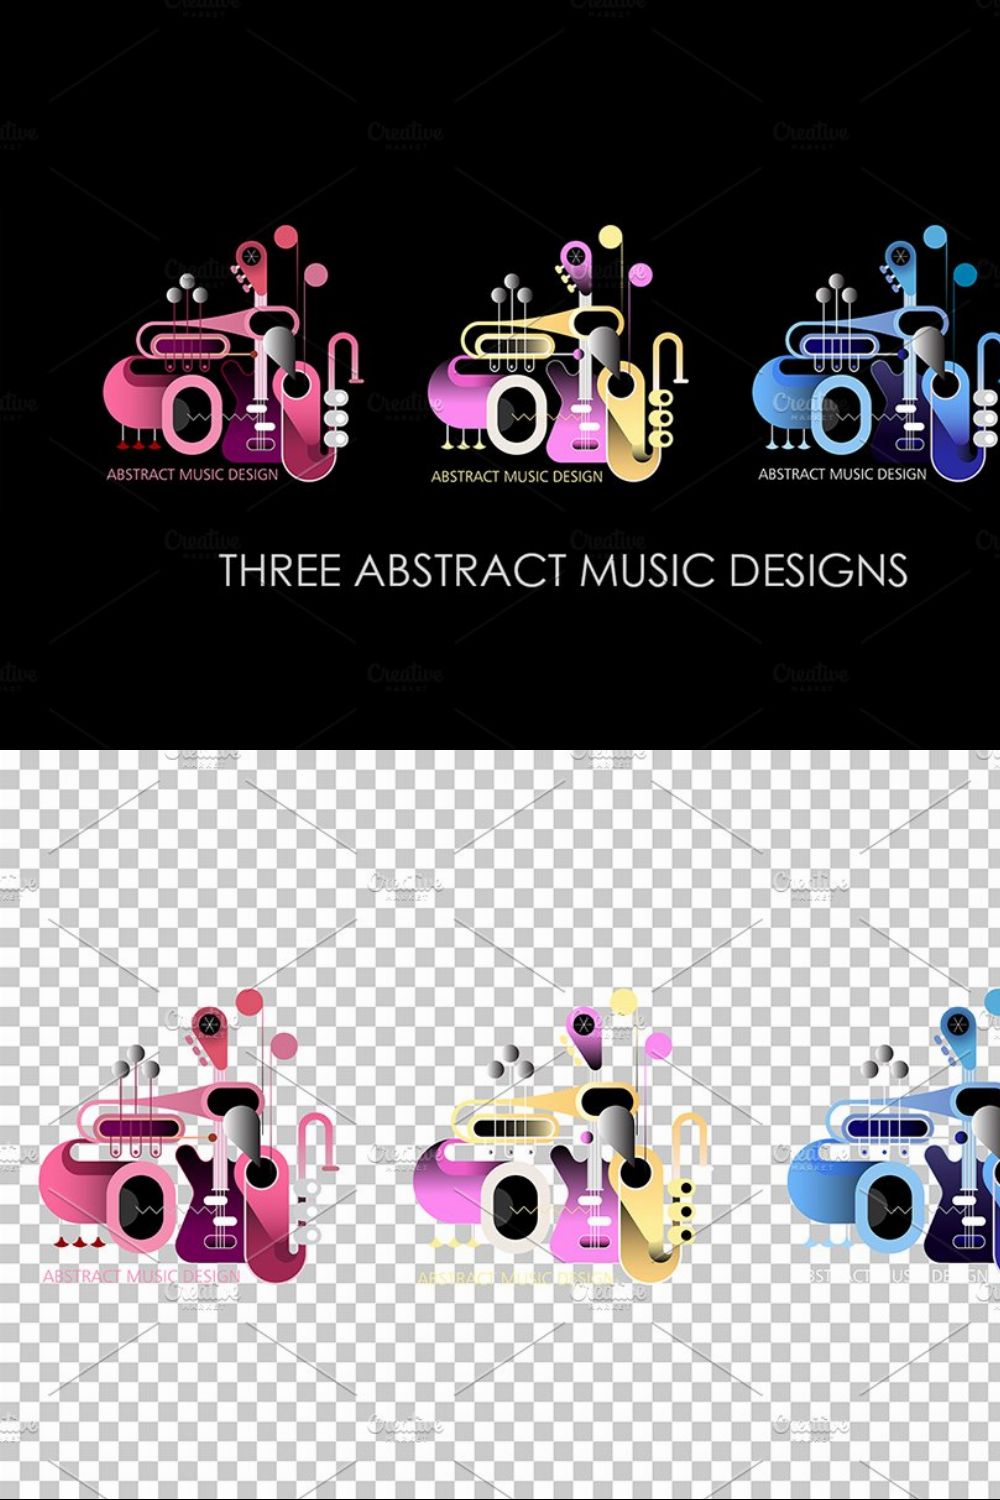 3 Concept Music Designs pinterest preview image.